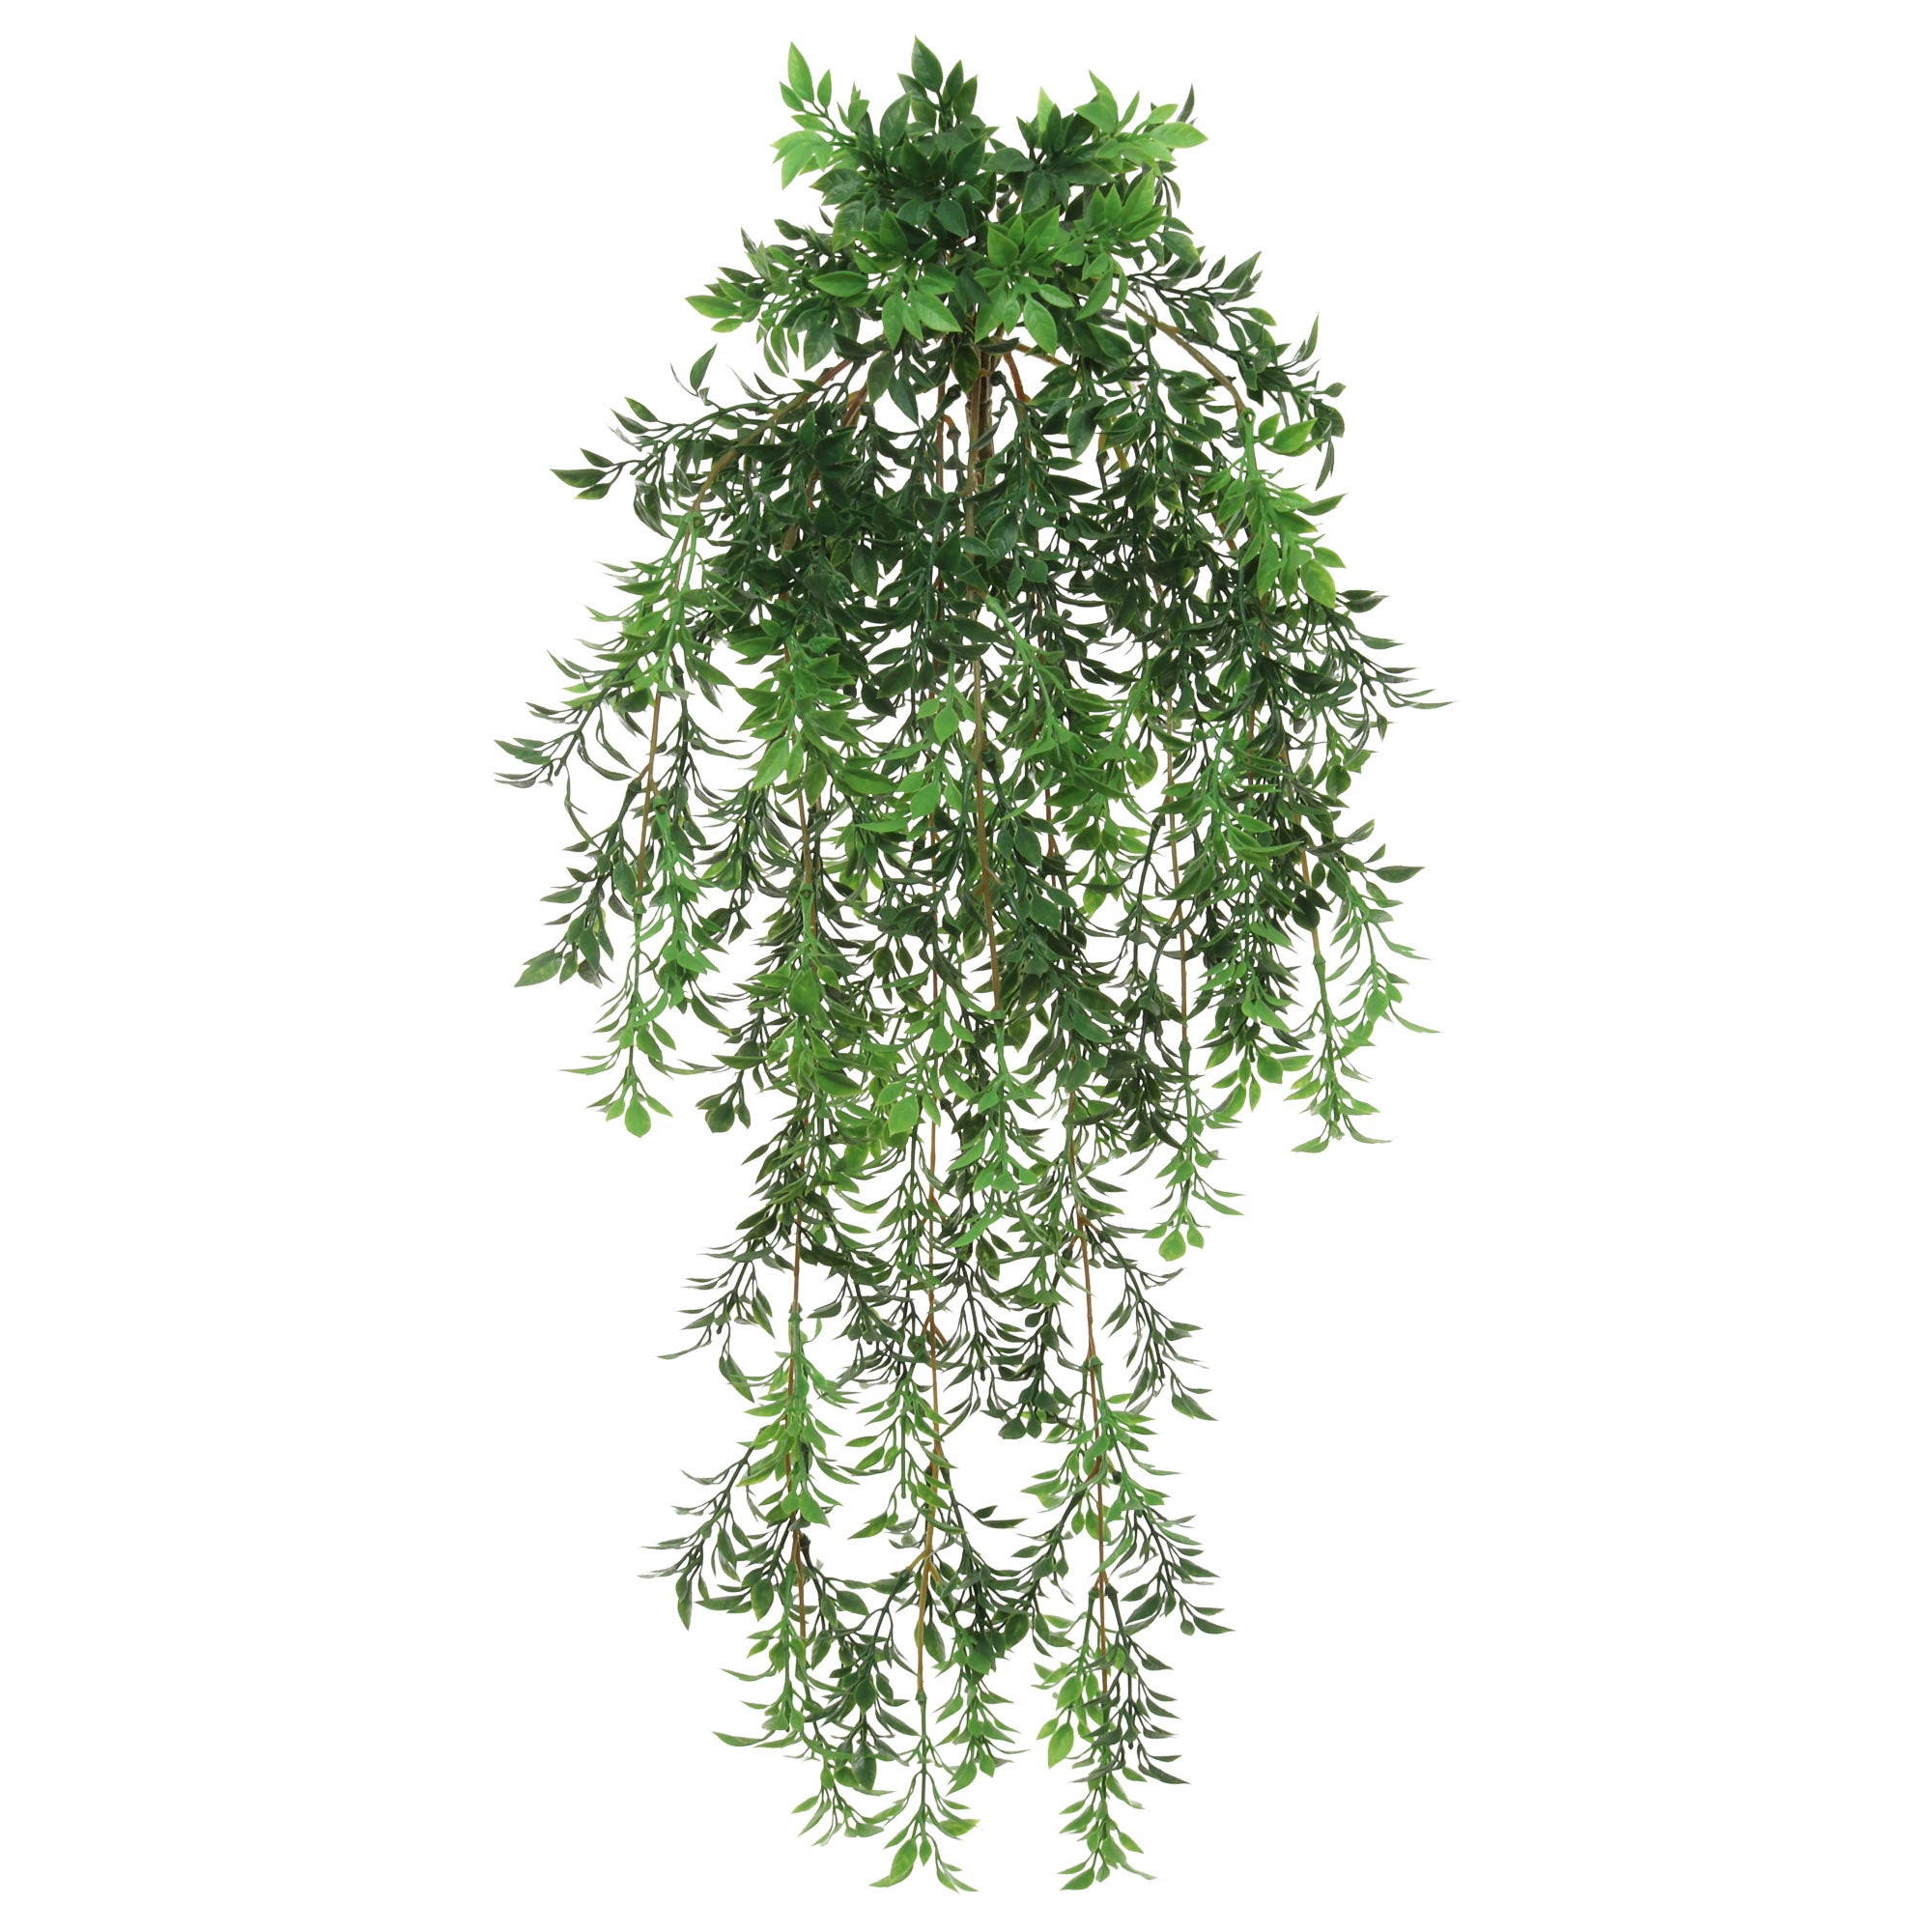 24" Artificial Tea Leaf Vine - 147 Tips for Lifelike and Versatile Greenery Decor